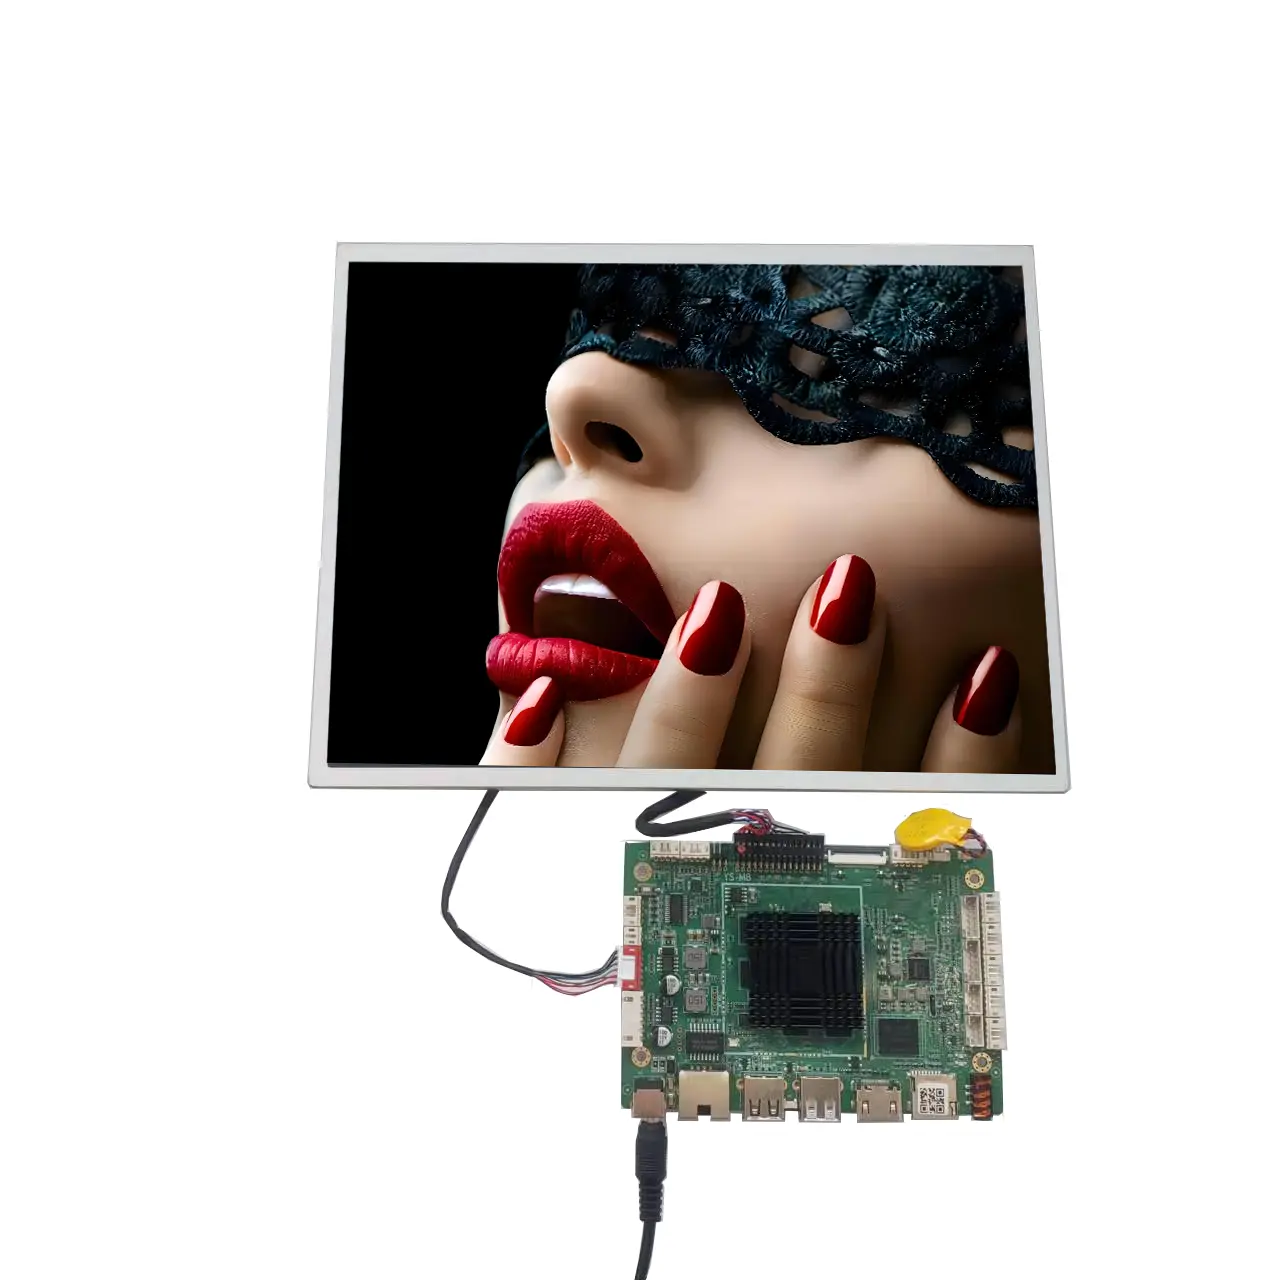 Pantalla de 12,1 pulgadas G121XN01 V0 Monitor LCD Interfaz LVDS Panel LCD Alto brillo 500 CDM